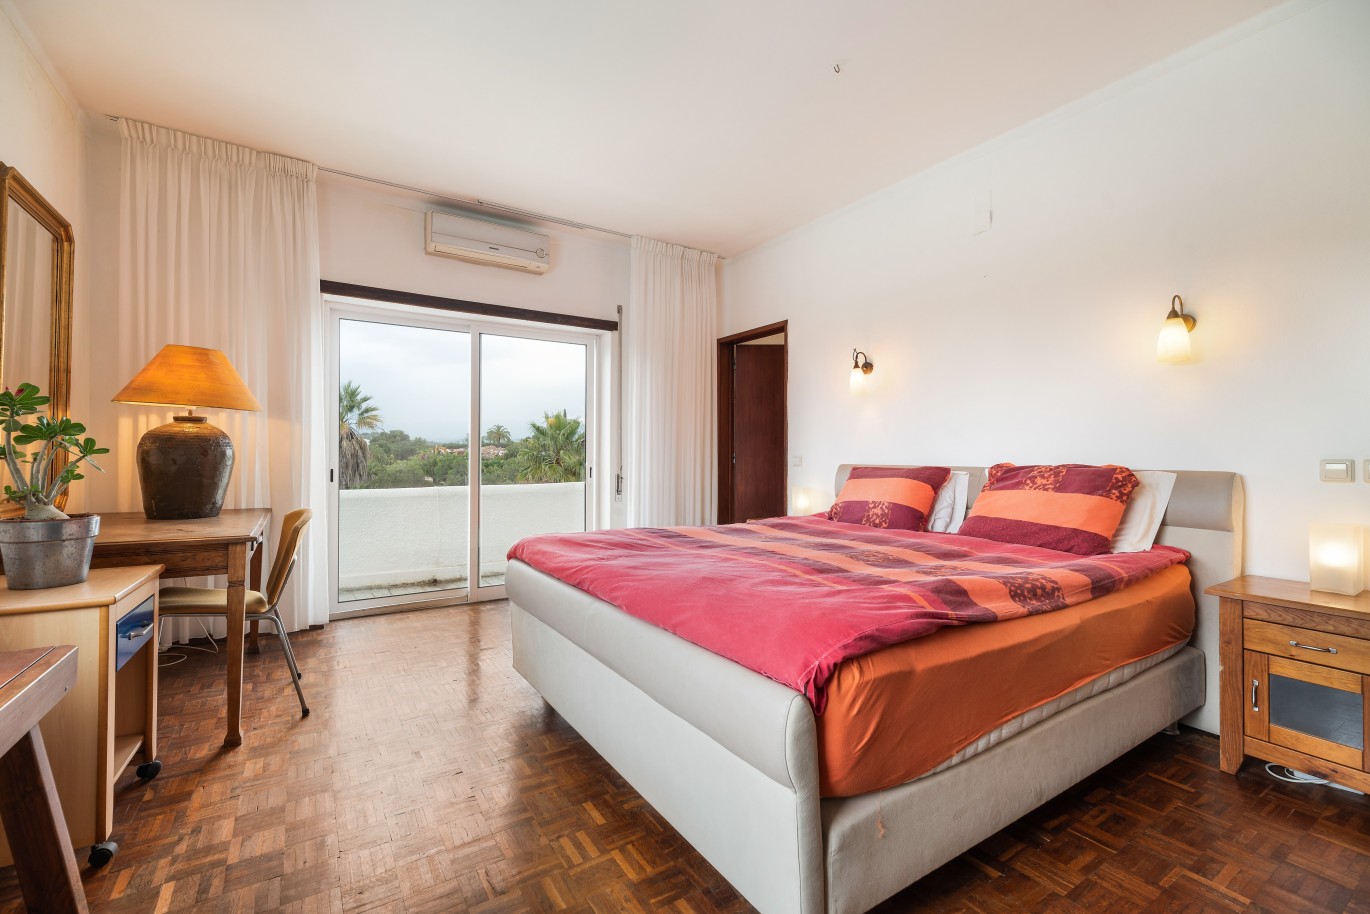 4 Bedroom Villa with swimming pool for sale in Monte Judeu, Algarve_227585